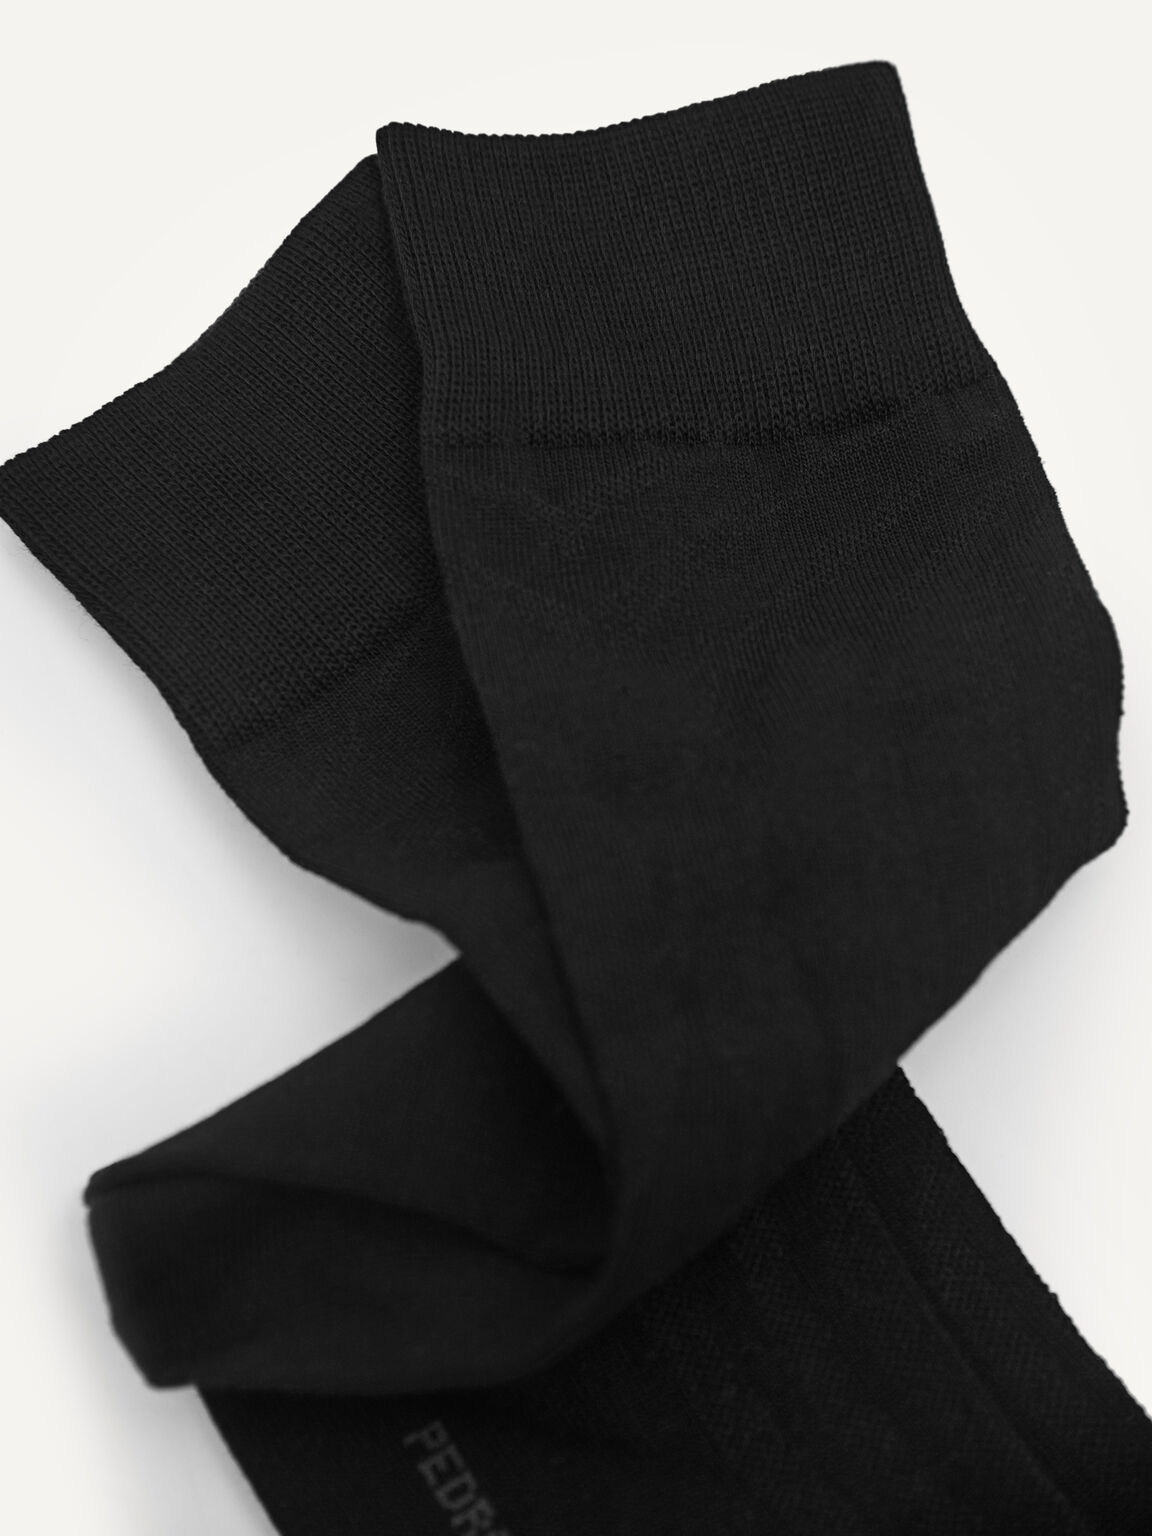 Men's Cotton Socks, Black